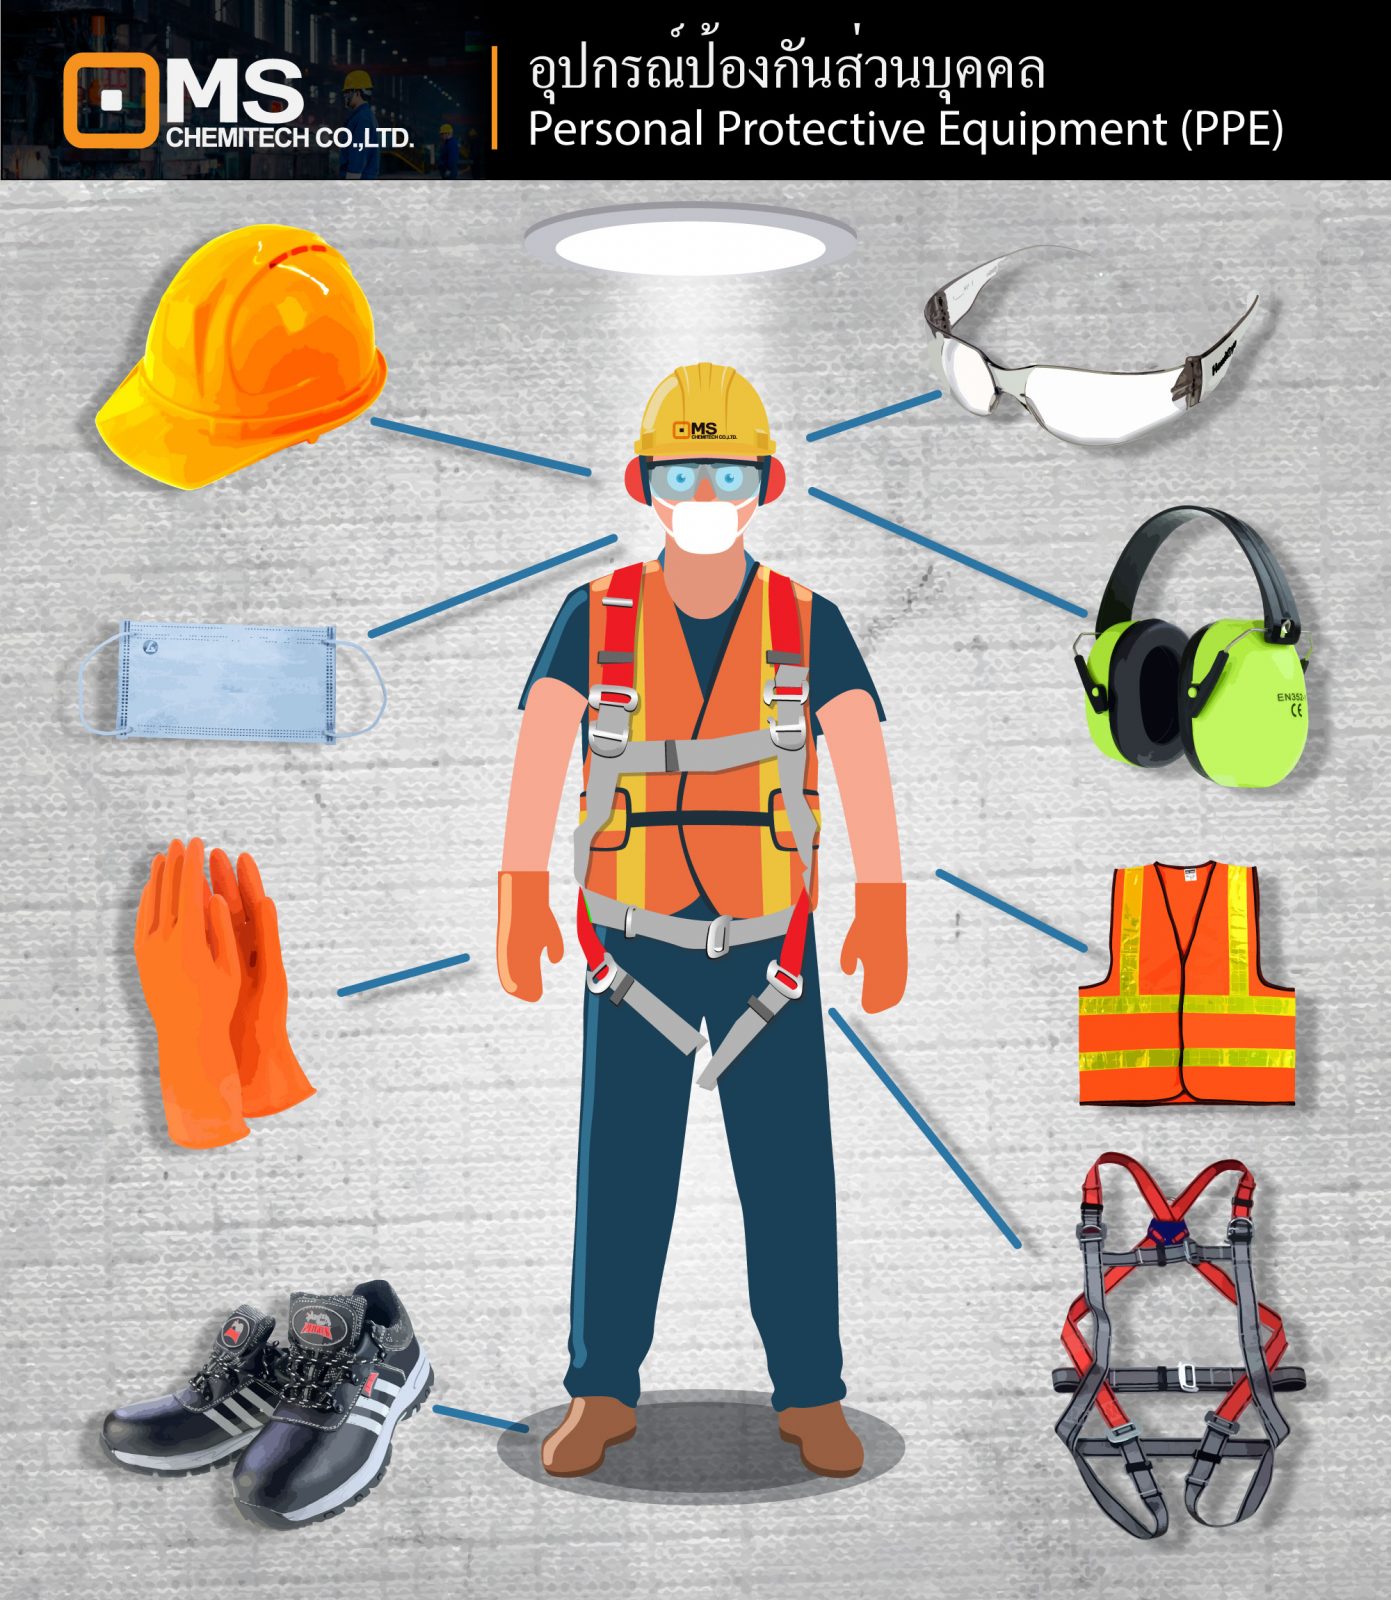 Защитные средства экран. Охрана труда одежда. Personal Protective Equipment PPE. PPE материал. Safety personal Protective Equipment.